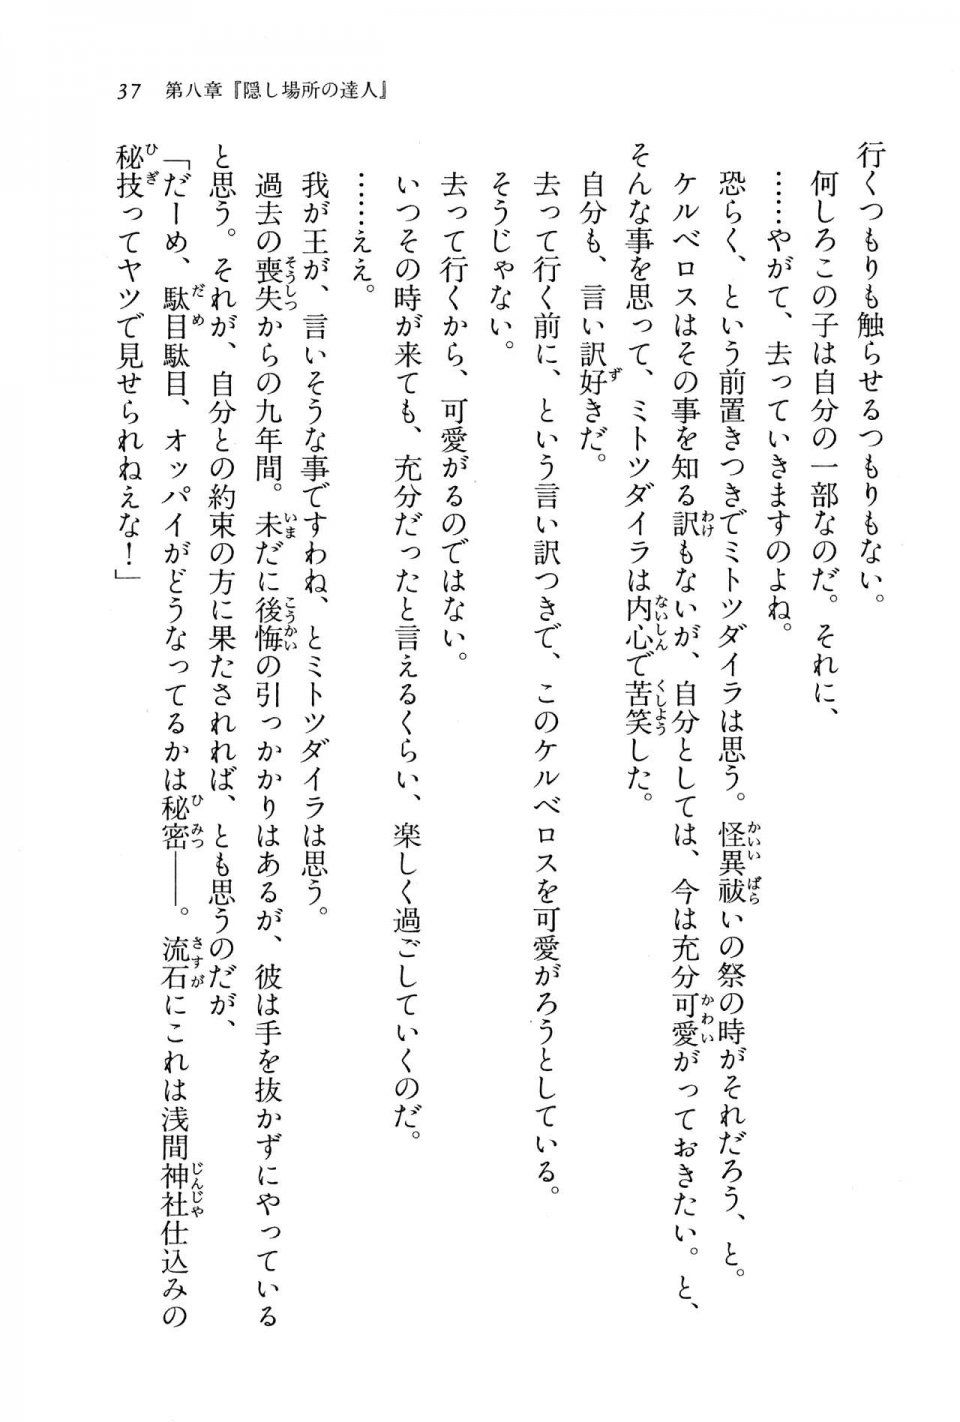 Kyoukai Senjou no Horizon BD Special Mininovel Vol 8(4B) - Photo #41